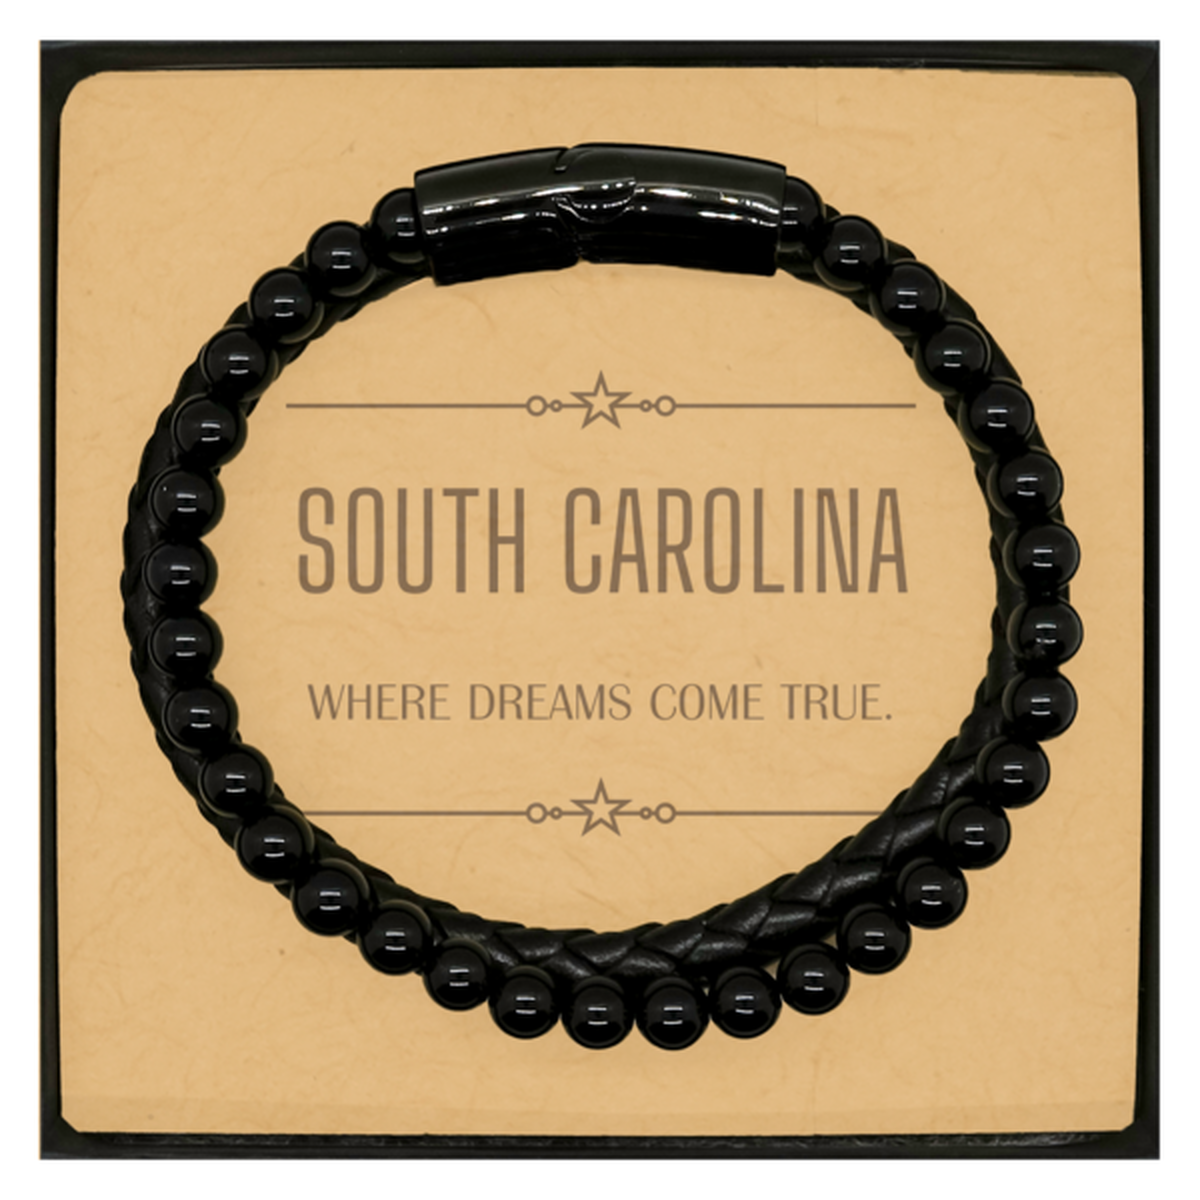 Love South Carolina State Stone Leather Bracelets, South Carolina Where dreams come true, Birthday Christmas Inspirational Gifts For South Carolina Men, Women, Friends